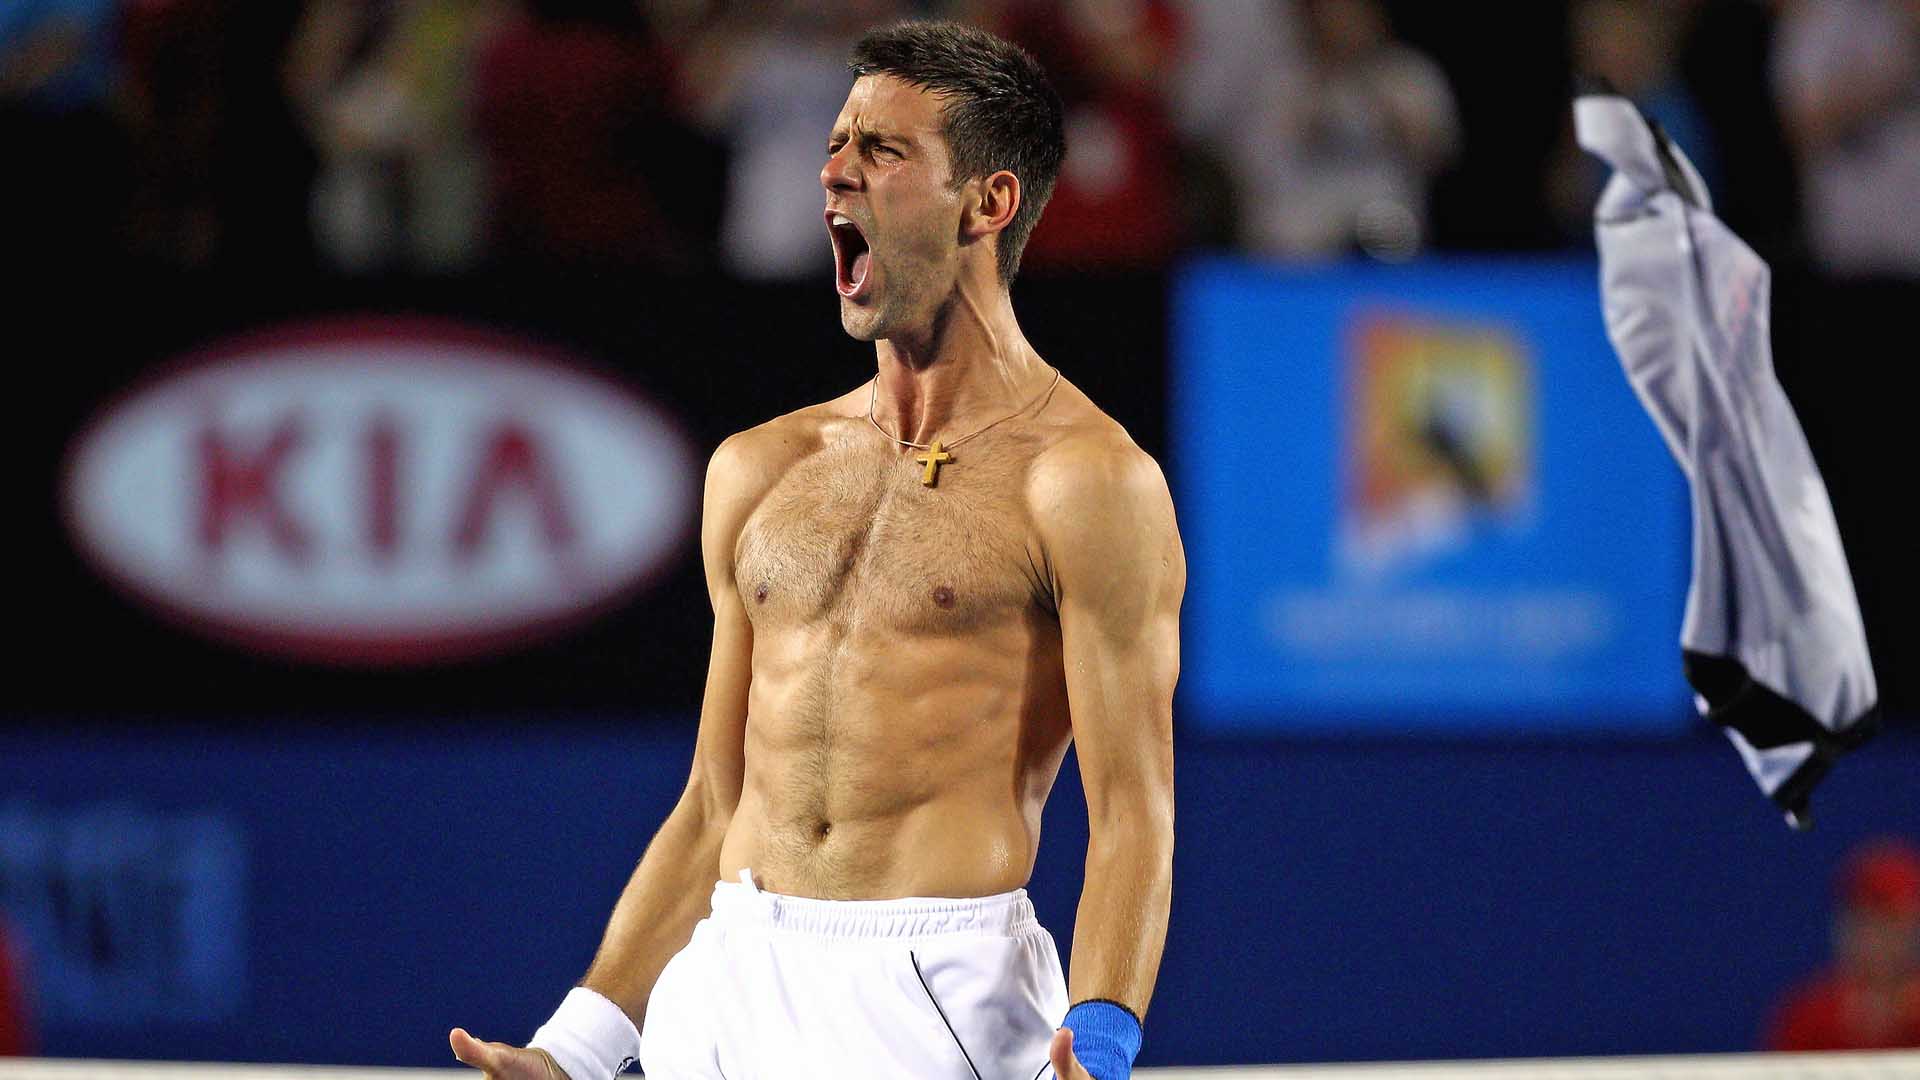 Remastered A Look Back At Novak Djokovic's 8 Australian Open Titles